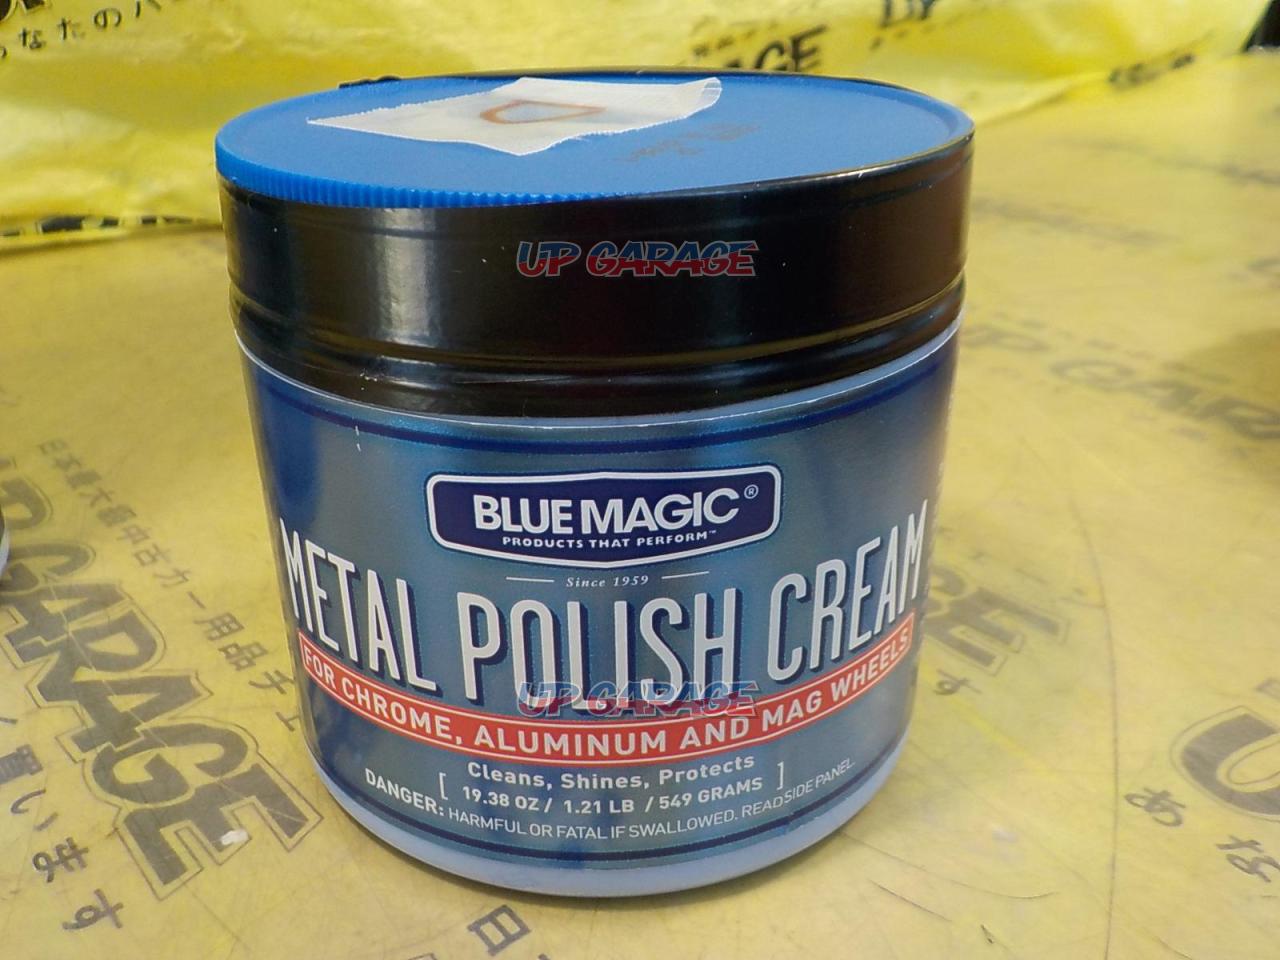 Blue Magic METAL POLISH CREAM, Car Wash Goods